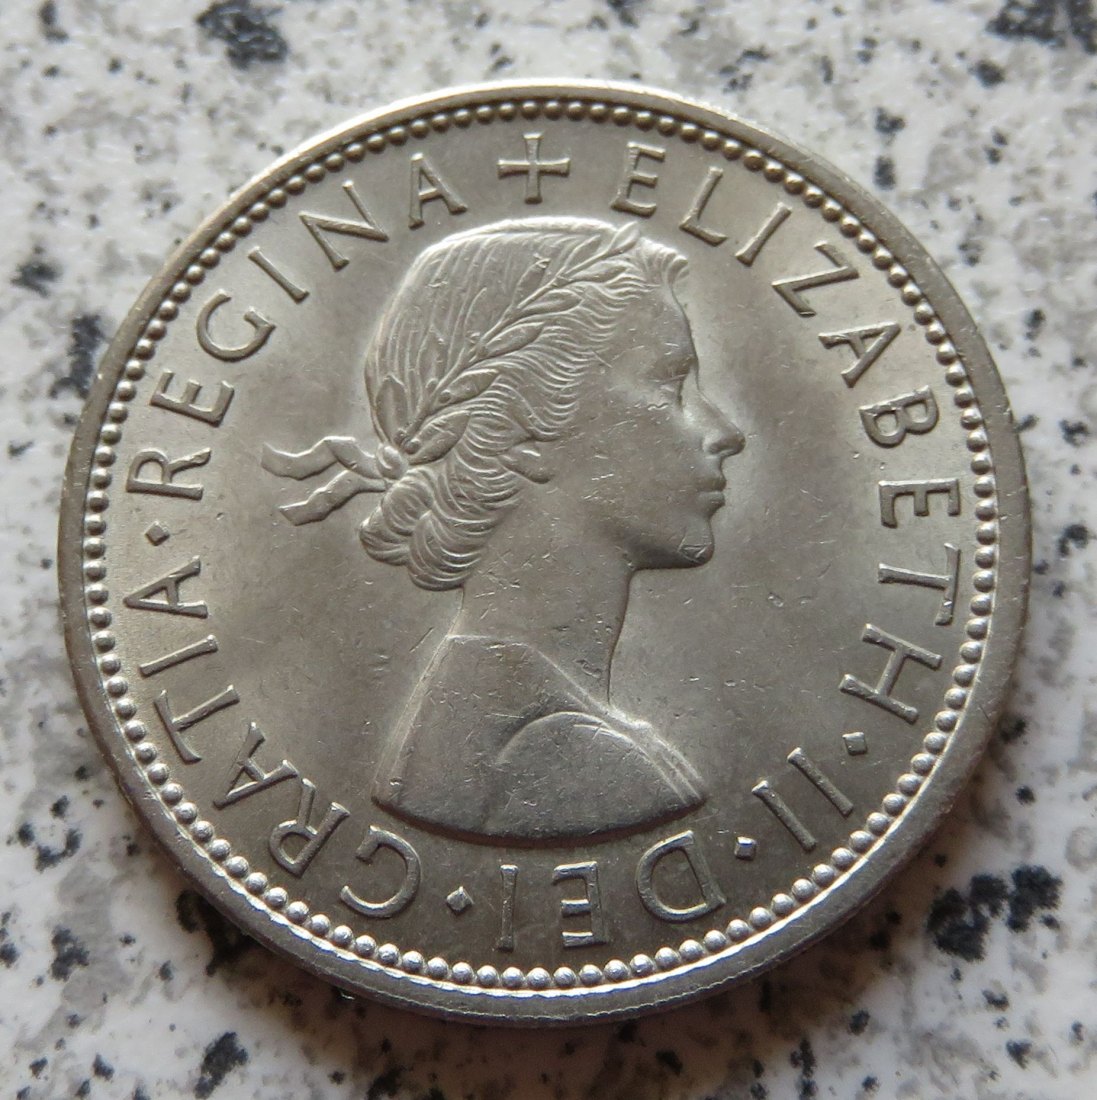  Großbritannien 2 Shillings 1966 funz/unz   